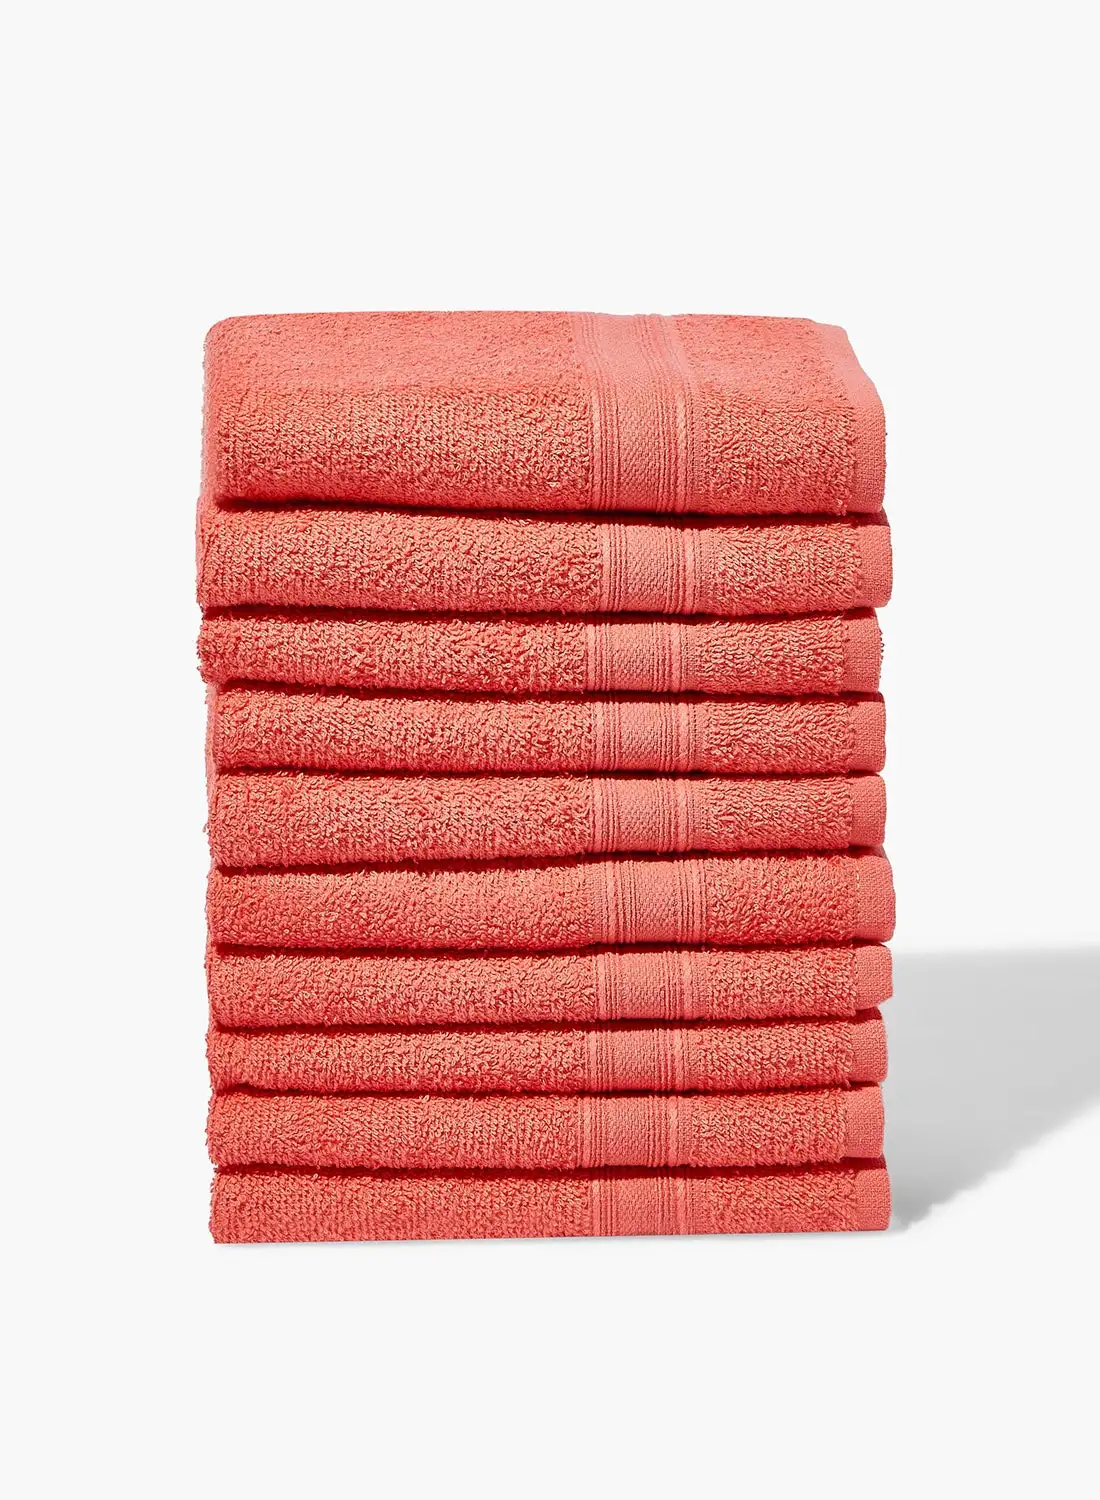 Amal 10 Piece Bathroom Towel Set - 400 GSM 100% Cotton Terry - 10 Face Towel - Melon Color -Quick Dry - Super Absorbent